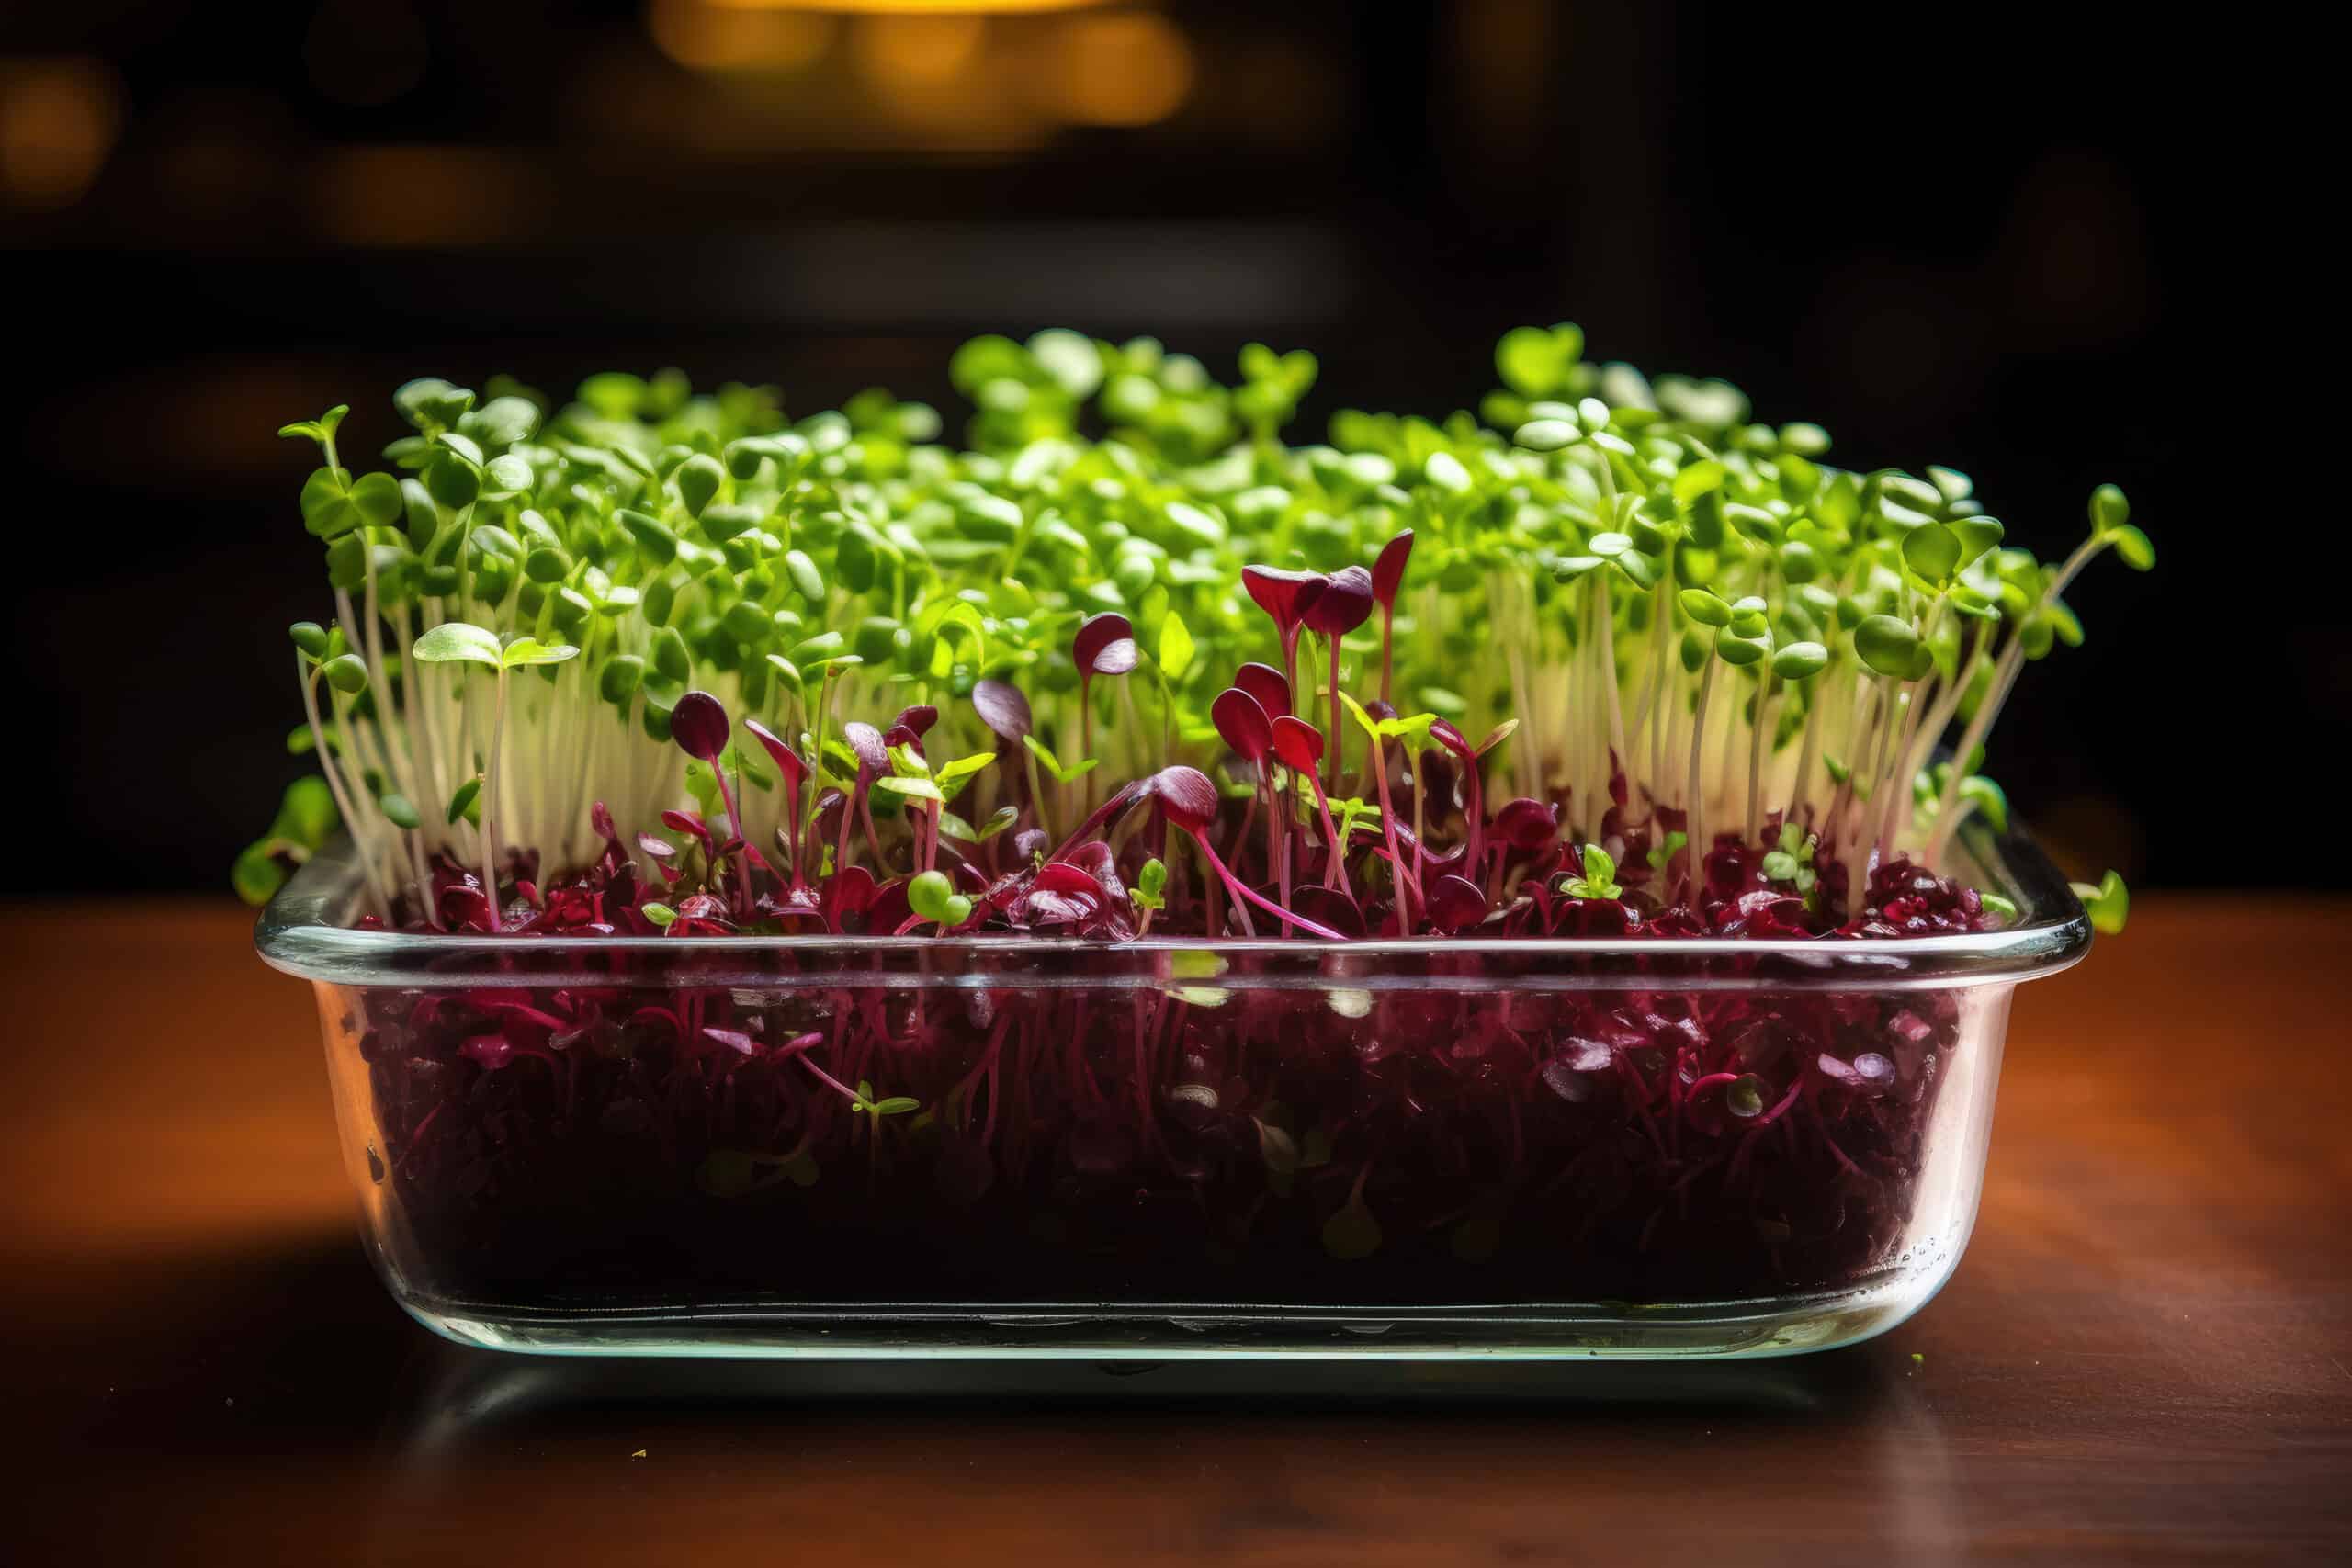 growmyownhealthfood.com : Can I eat microgreens instead of vegetables?